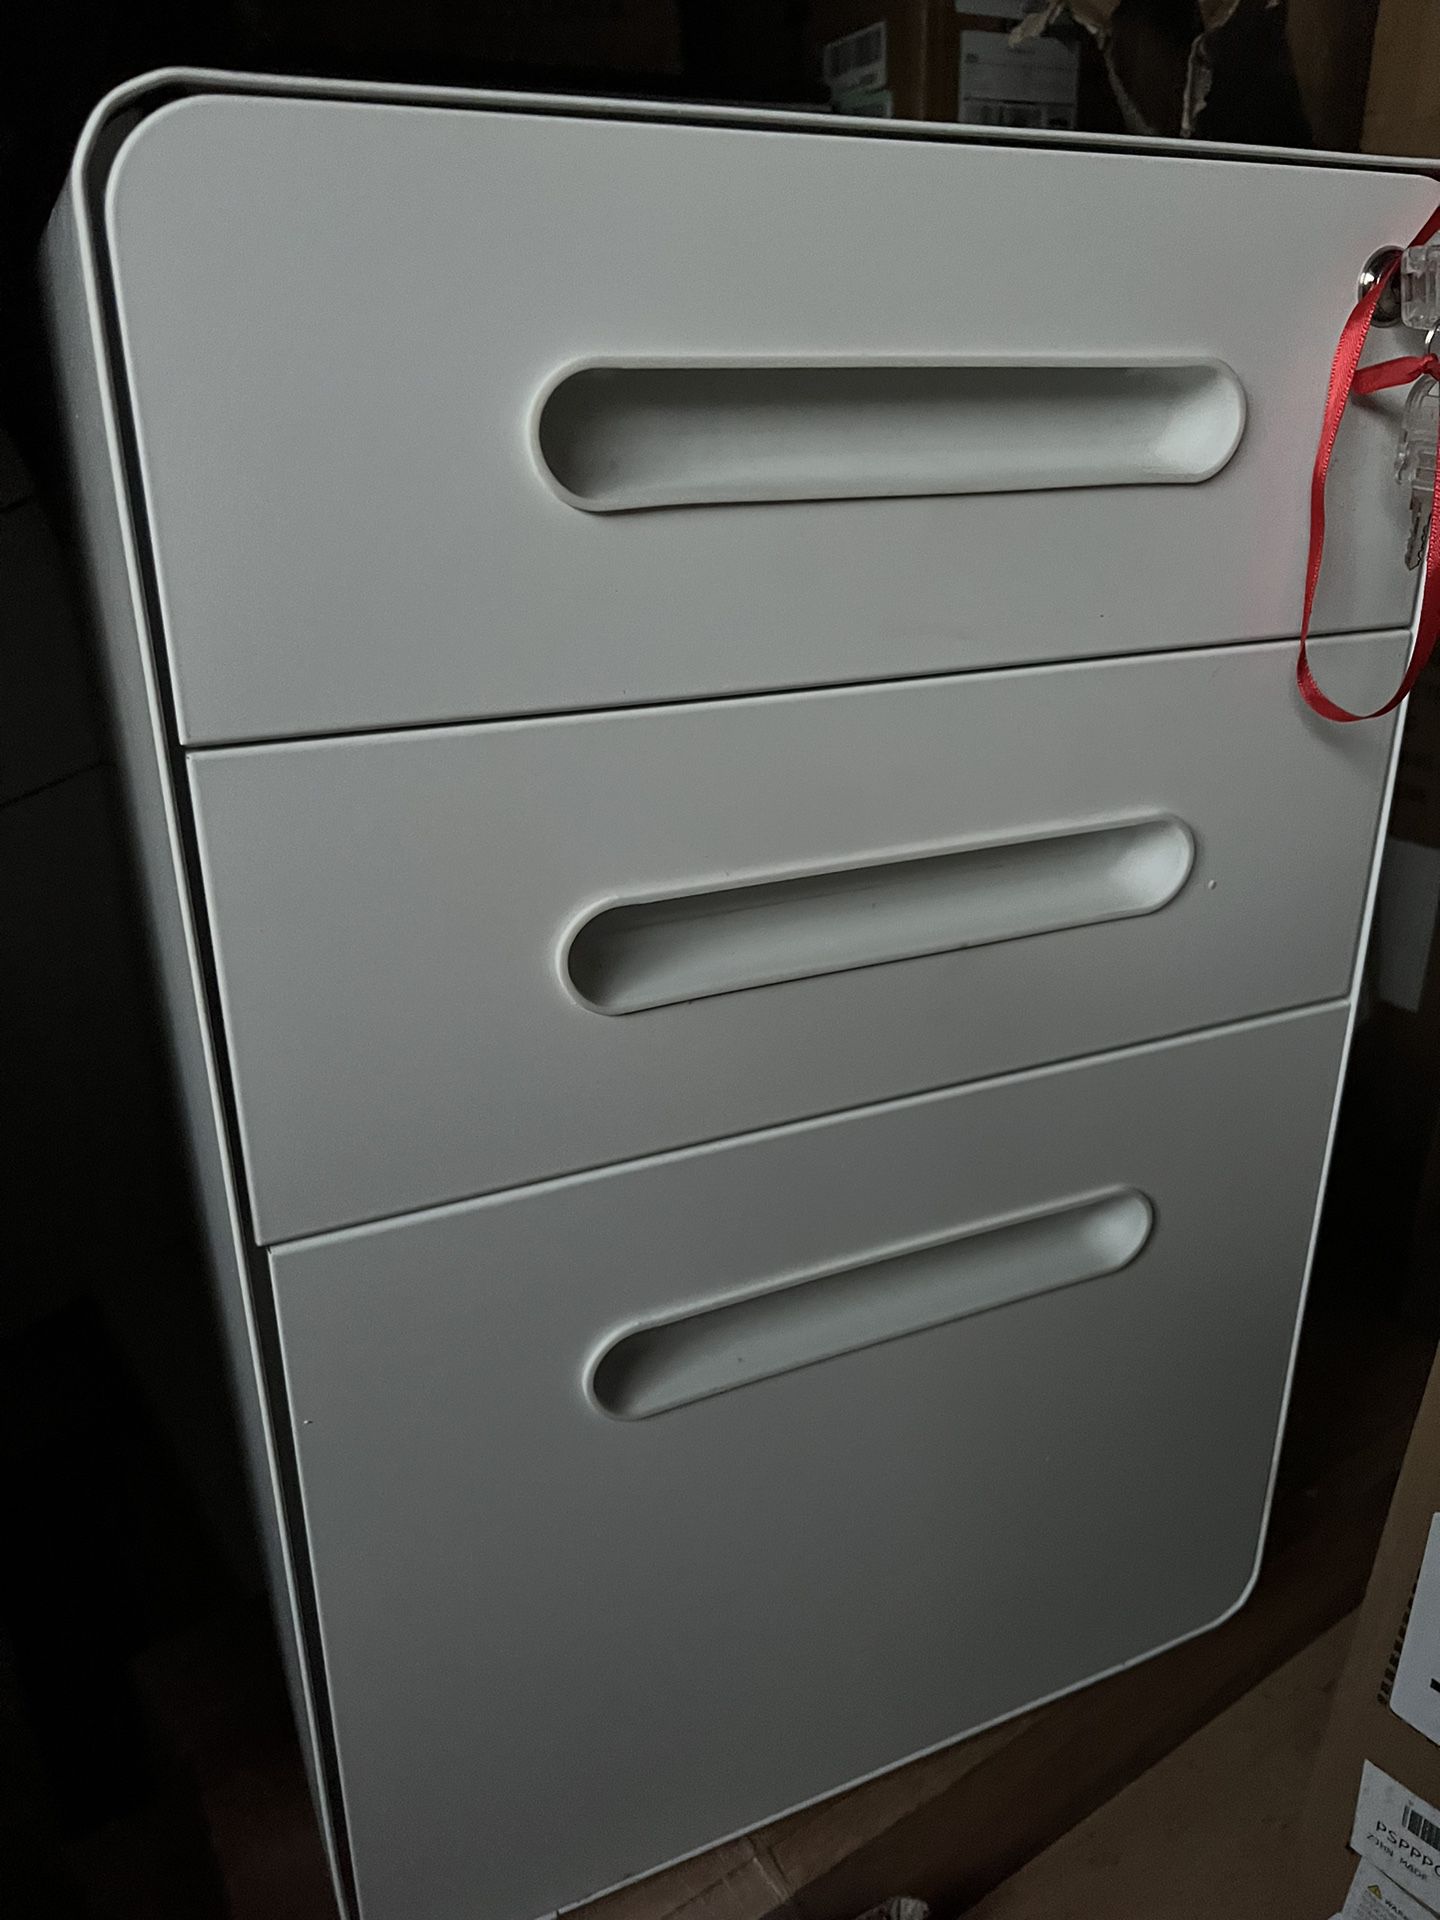 3-Drawer Metal Filing Drawers Lockable Rolling File Cabinet in White